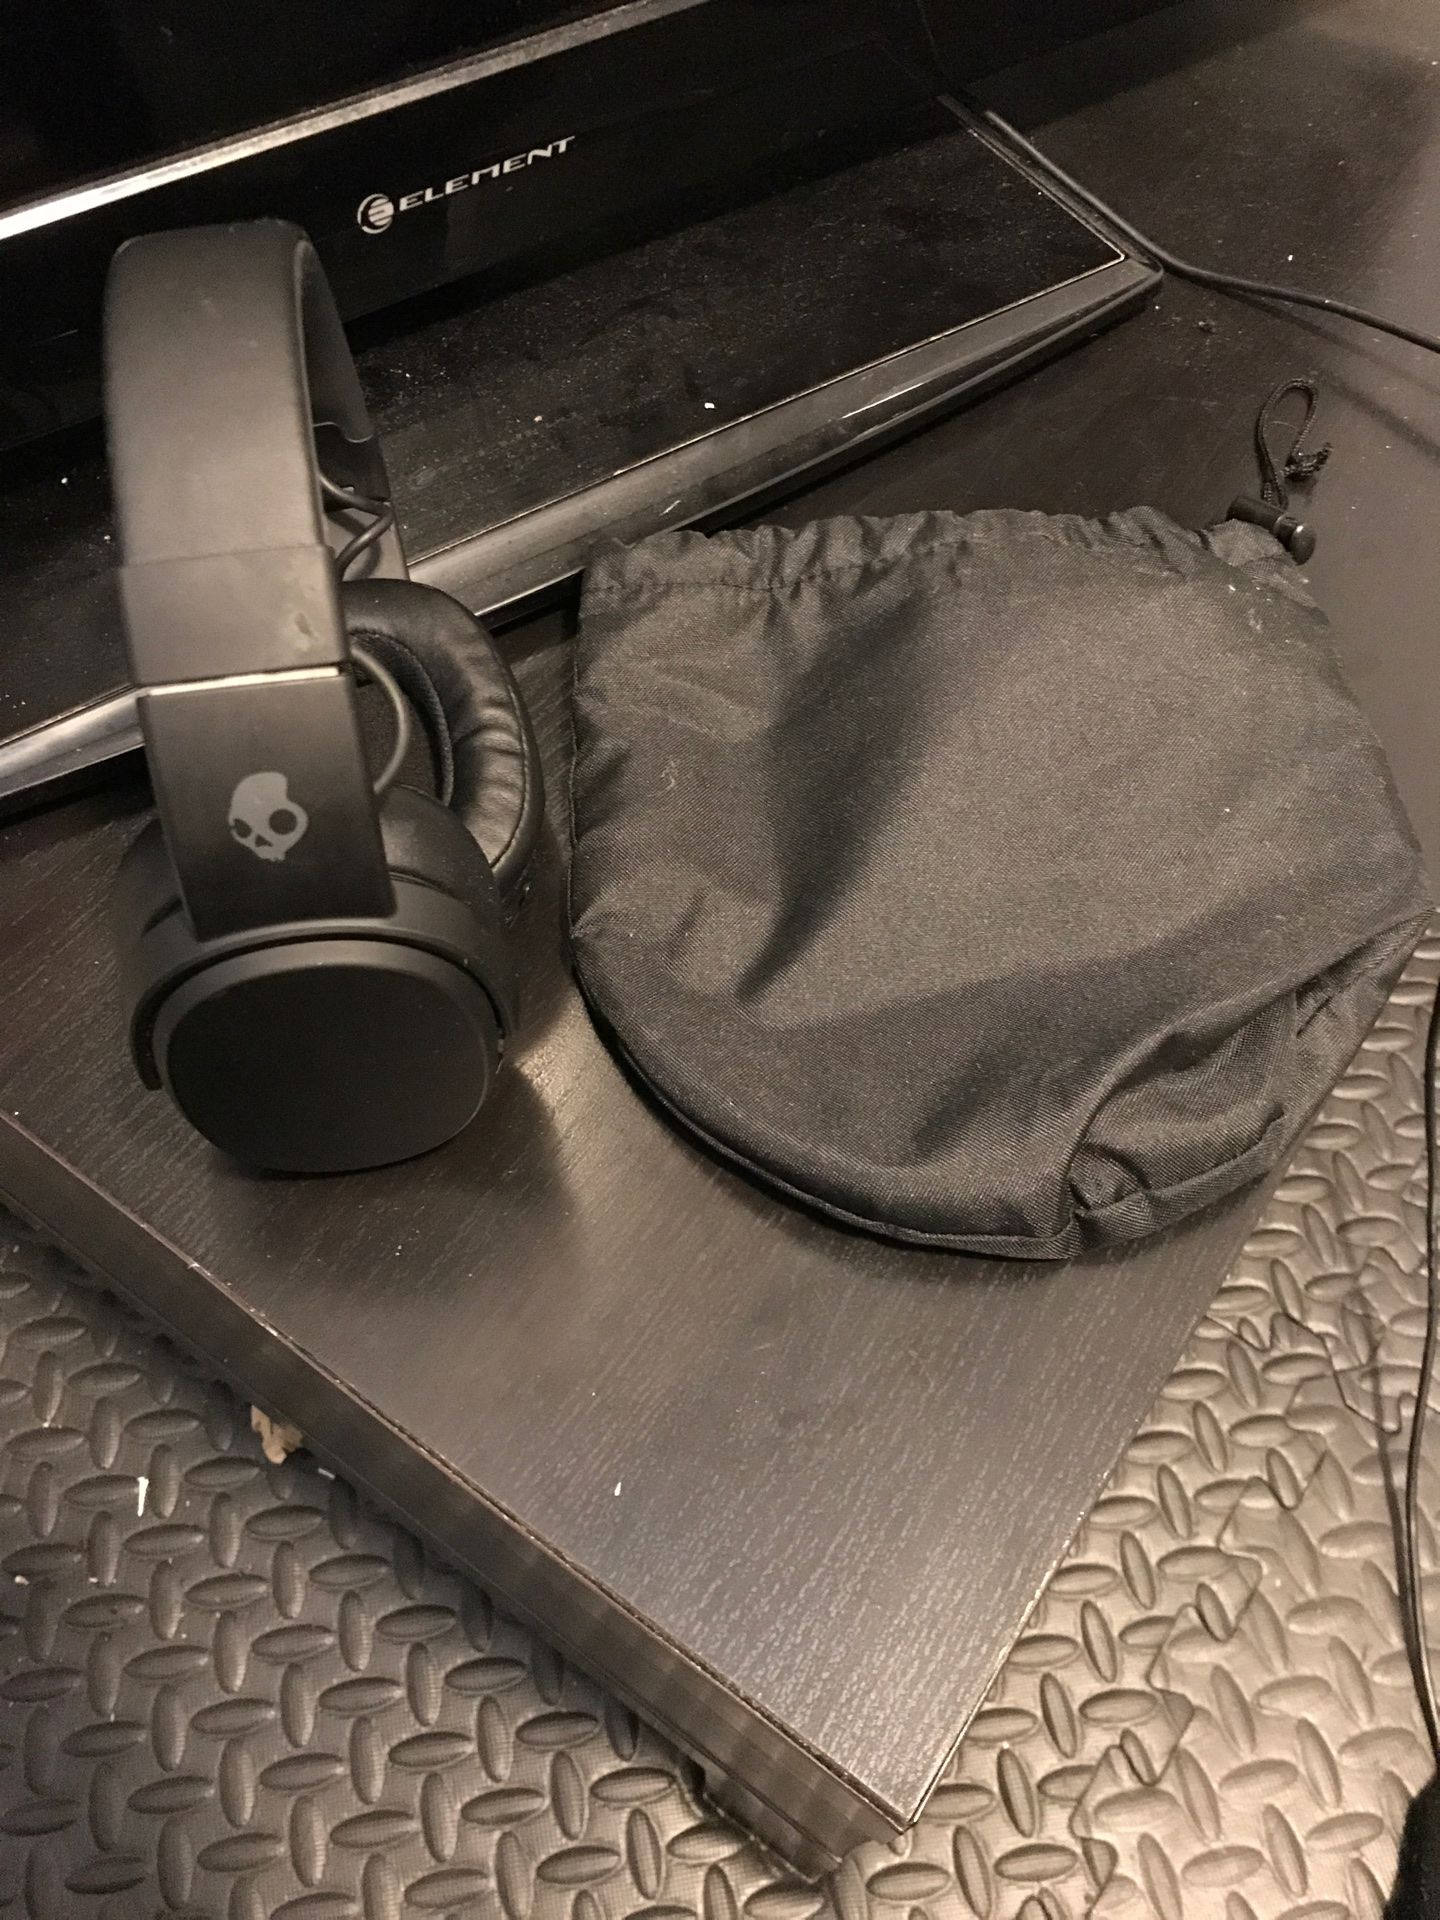 Skullcandy Crusher wireless headphones